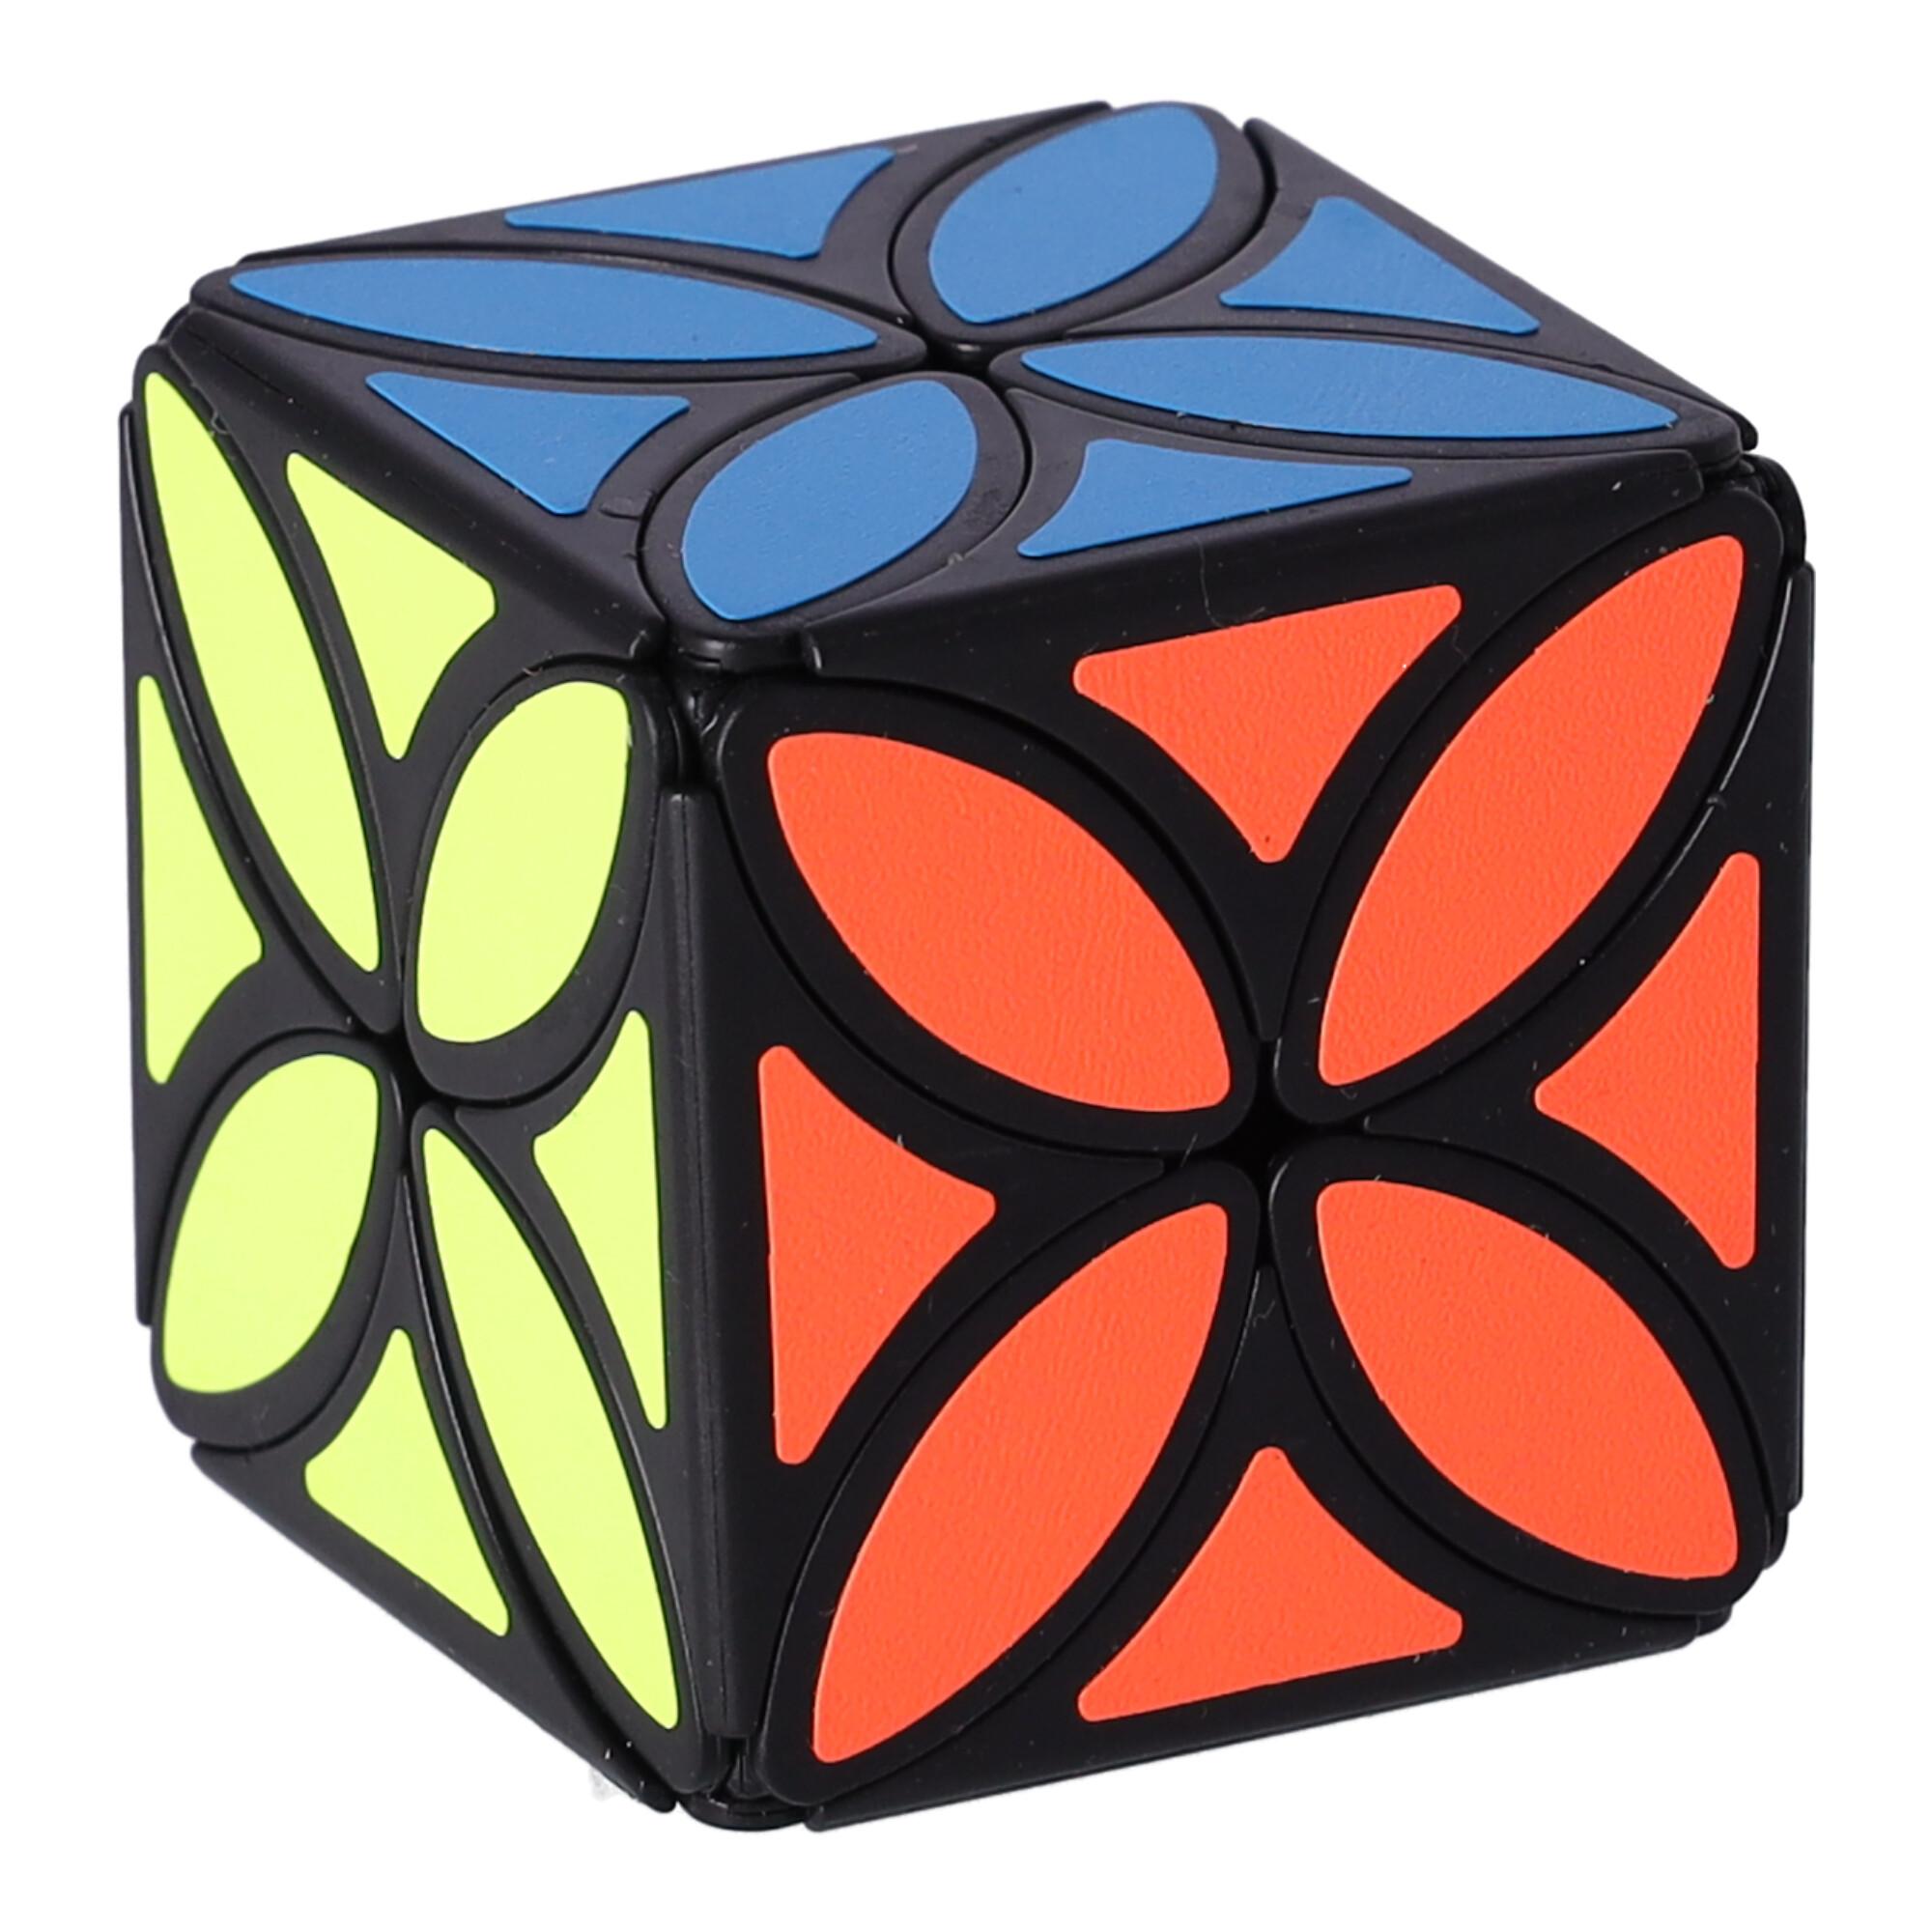 Modern jigsaw puzzle, logic cube, Rubik's Cube - Leaf Clover's, type III